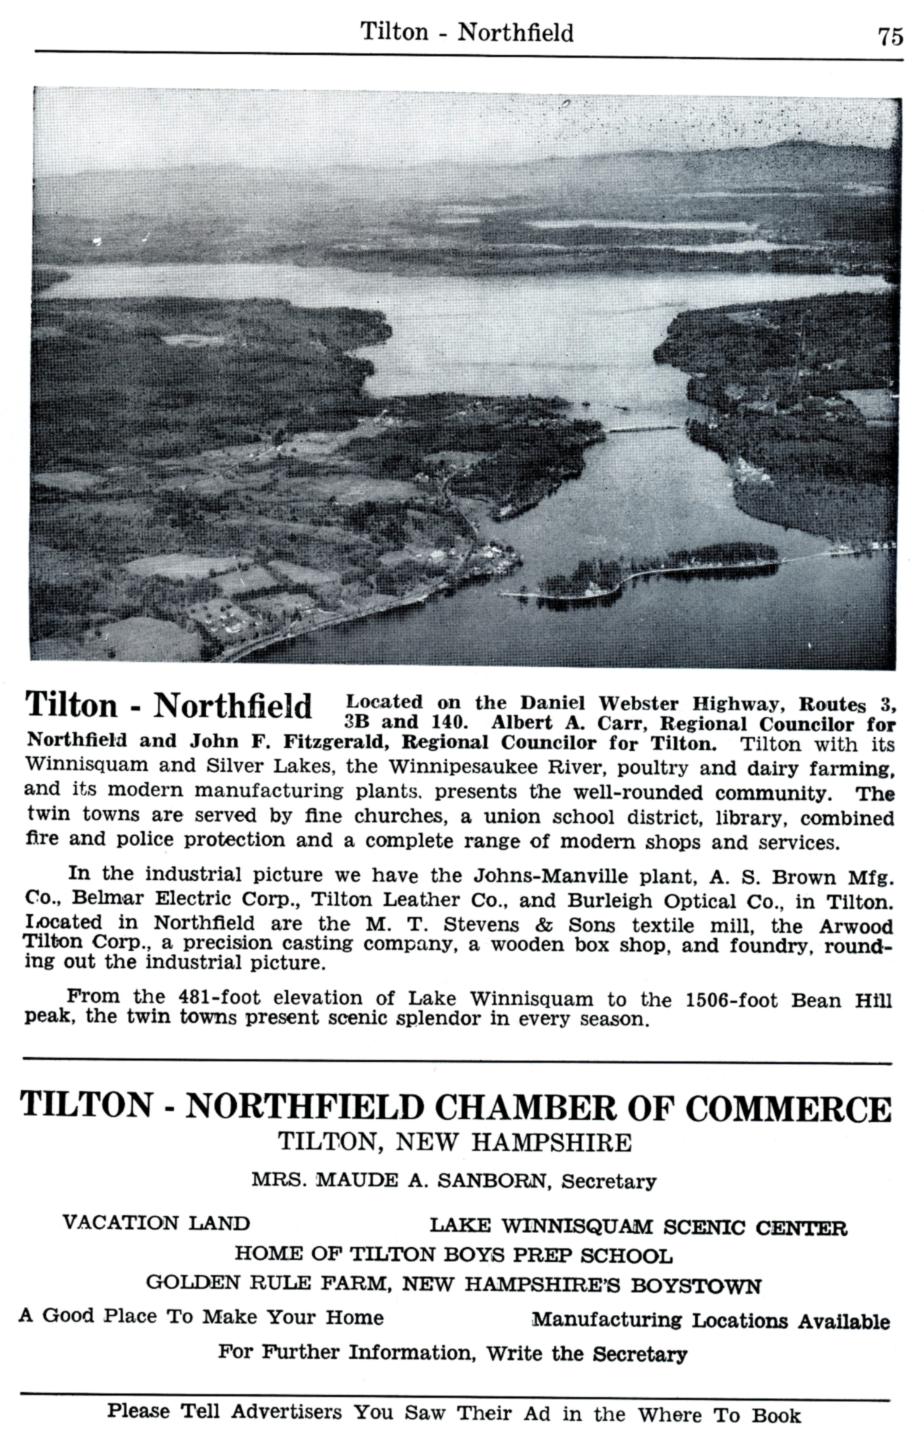 Tilton New Hampshire Visitors Guide - 1954